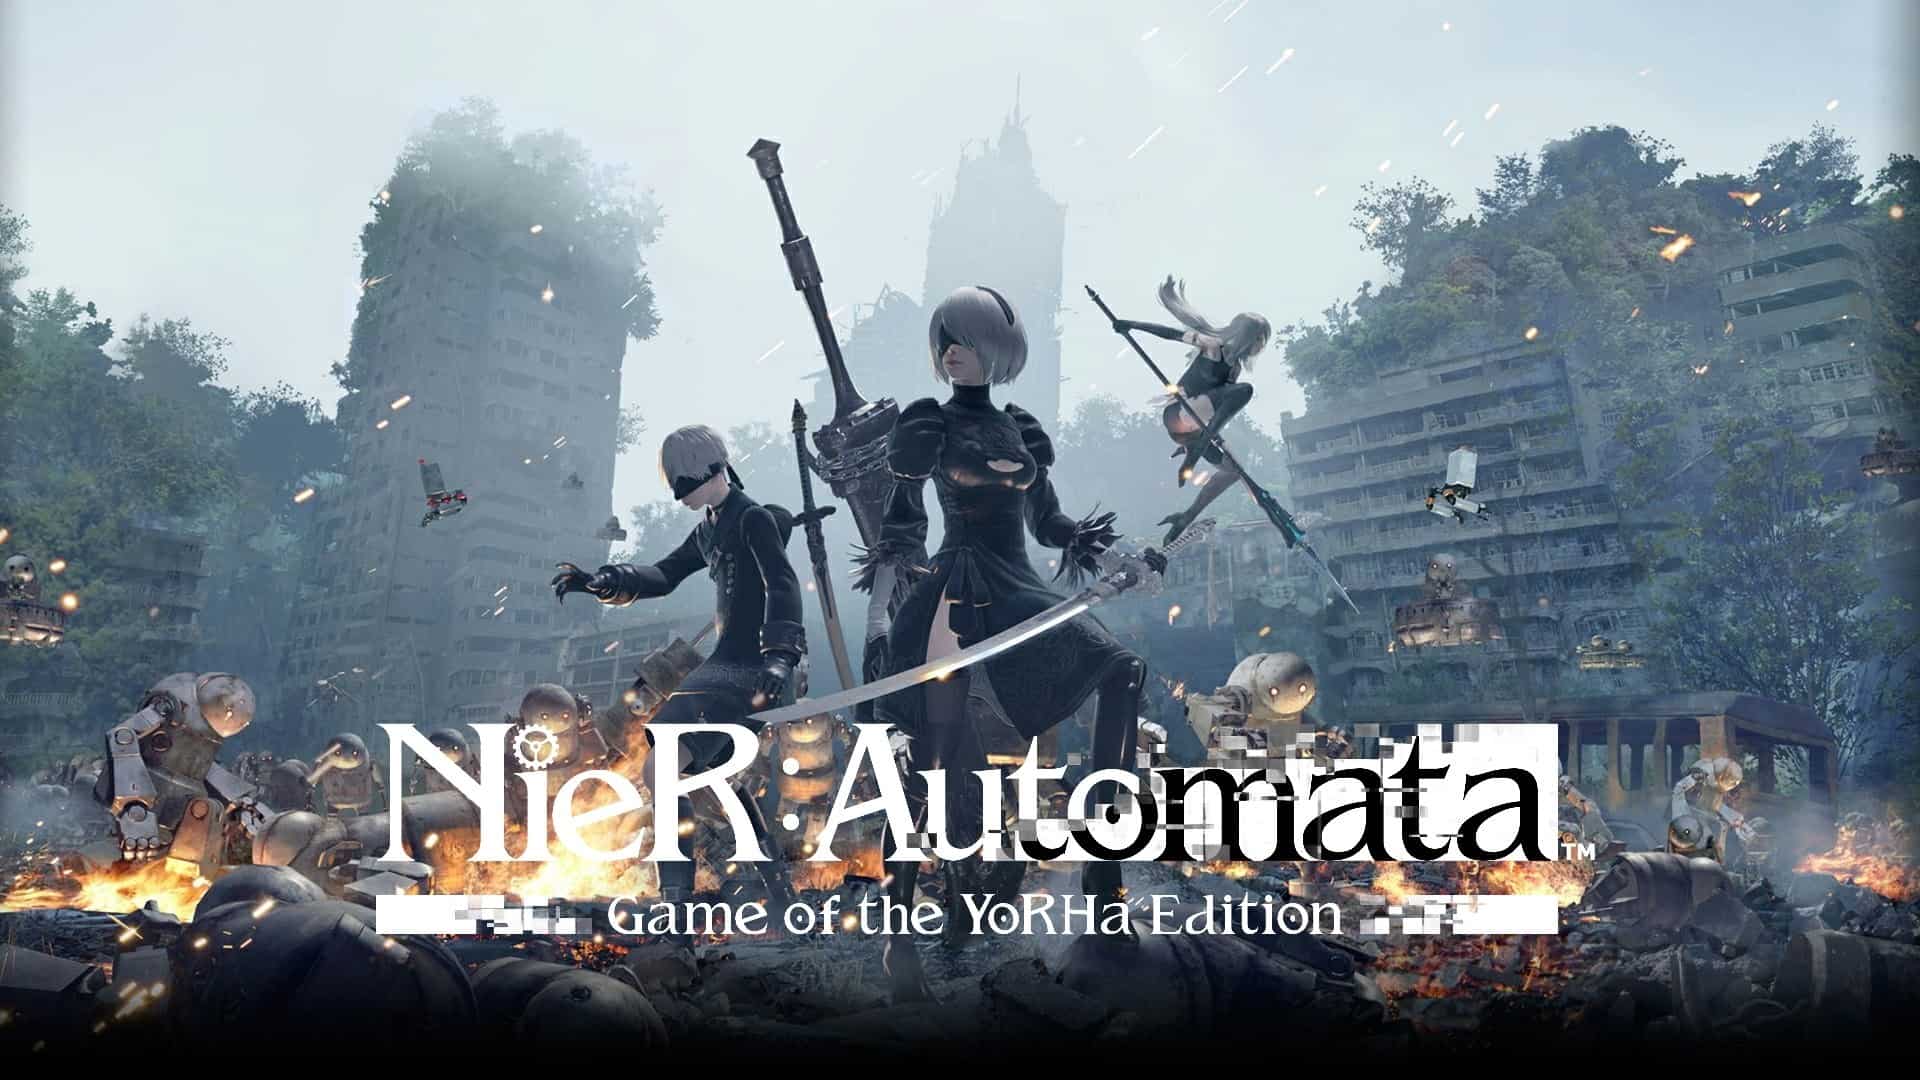 NieR: Automata The End of YoRHa Edition - Nintendo Switch | | GameStop